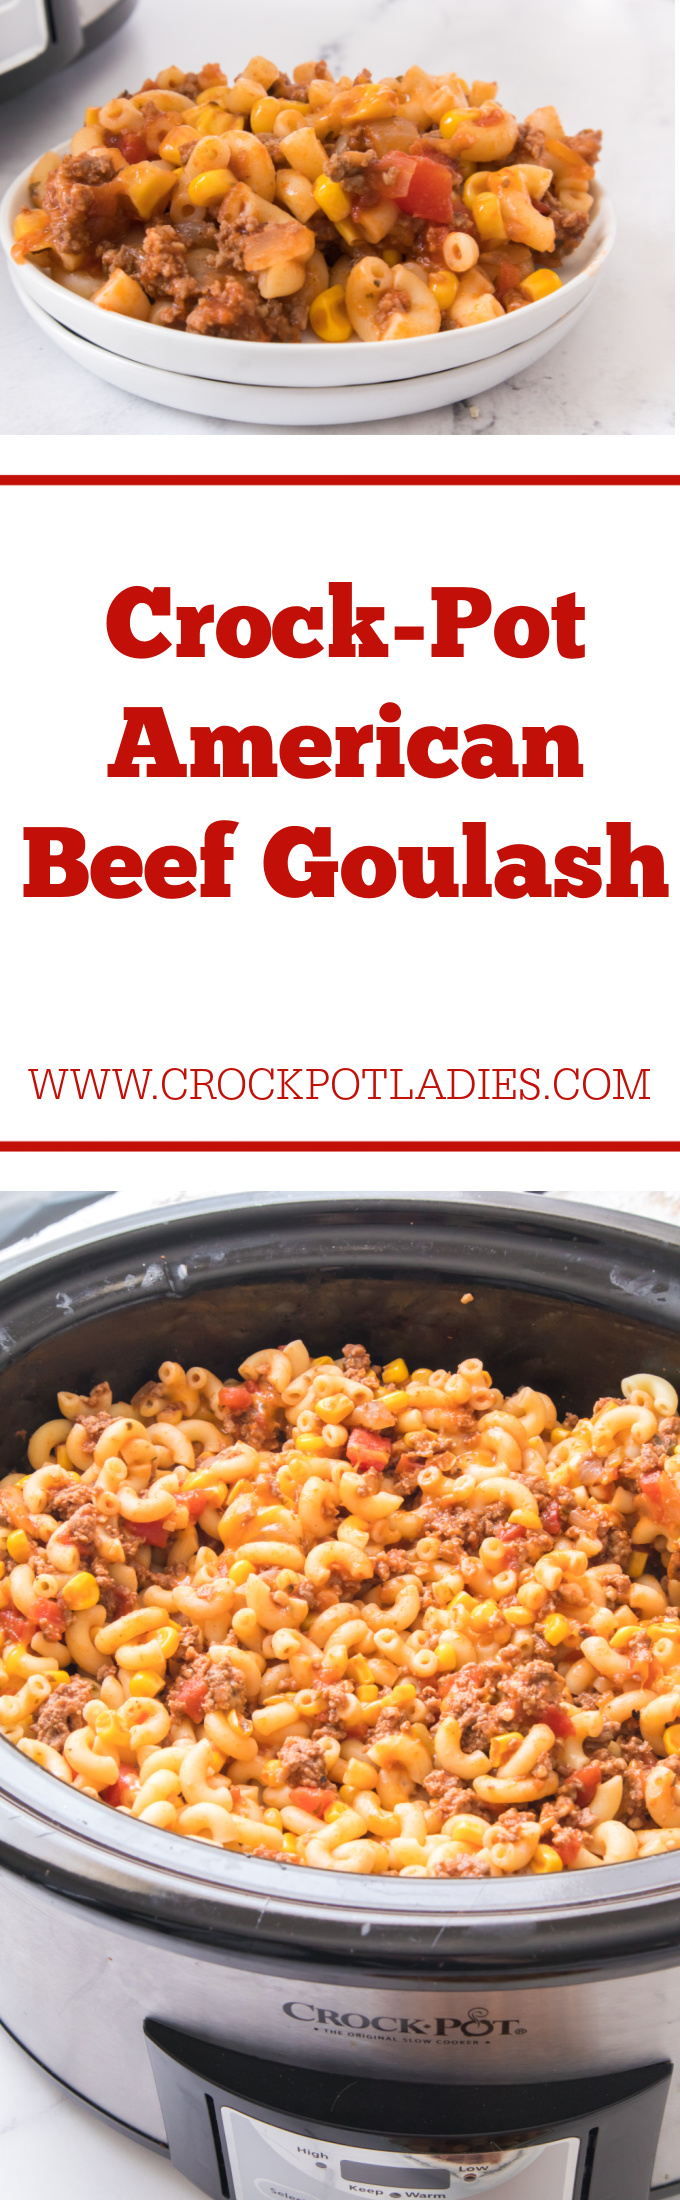 Crock-Pot American Beef Goulash